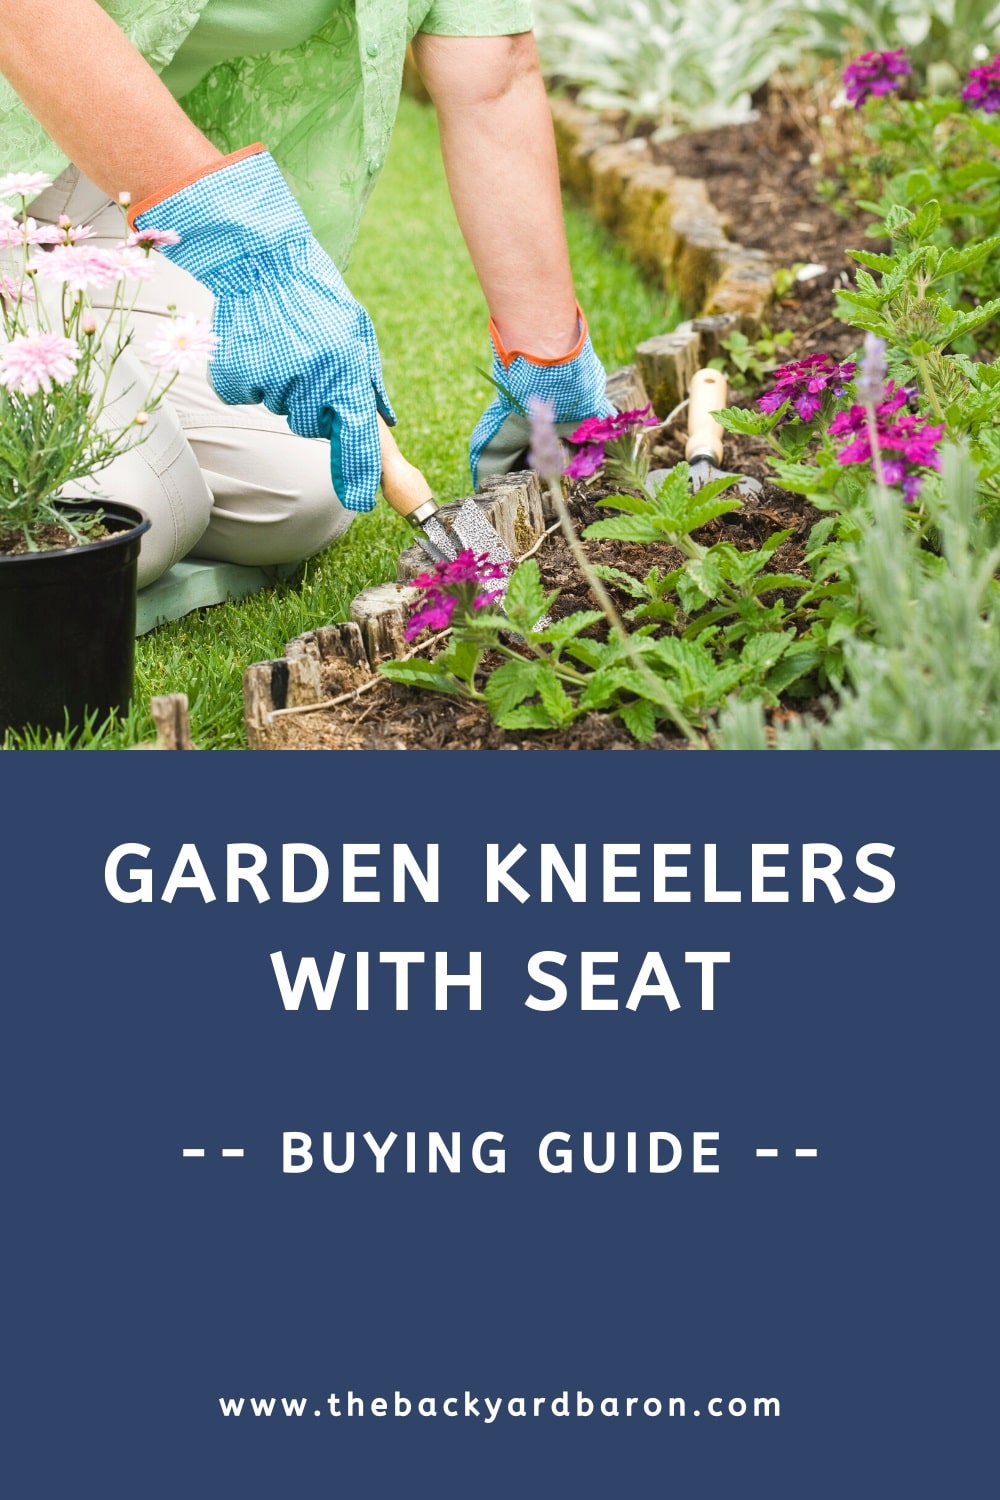 Garden kneeler and seat buying guide